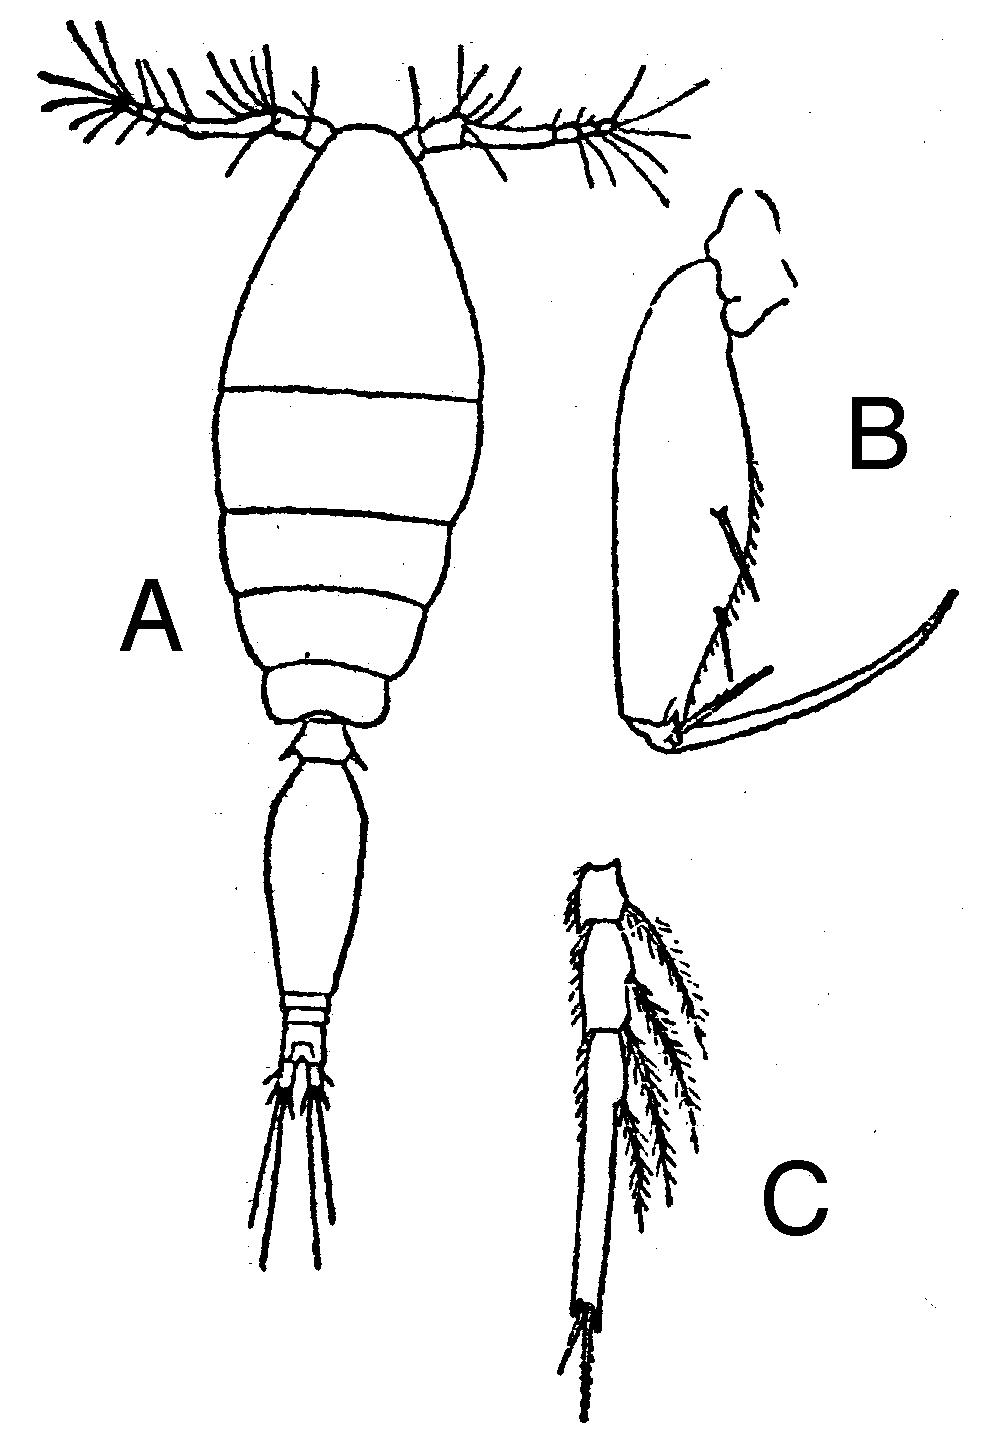 Species Oncaea tenella - Plate 1 of morphological figures